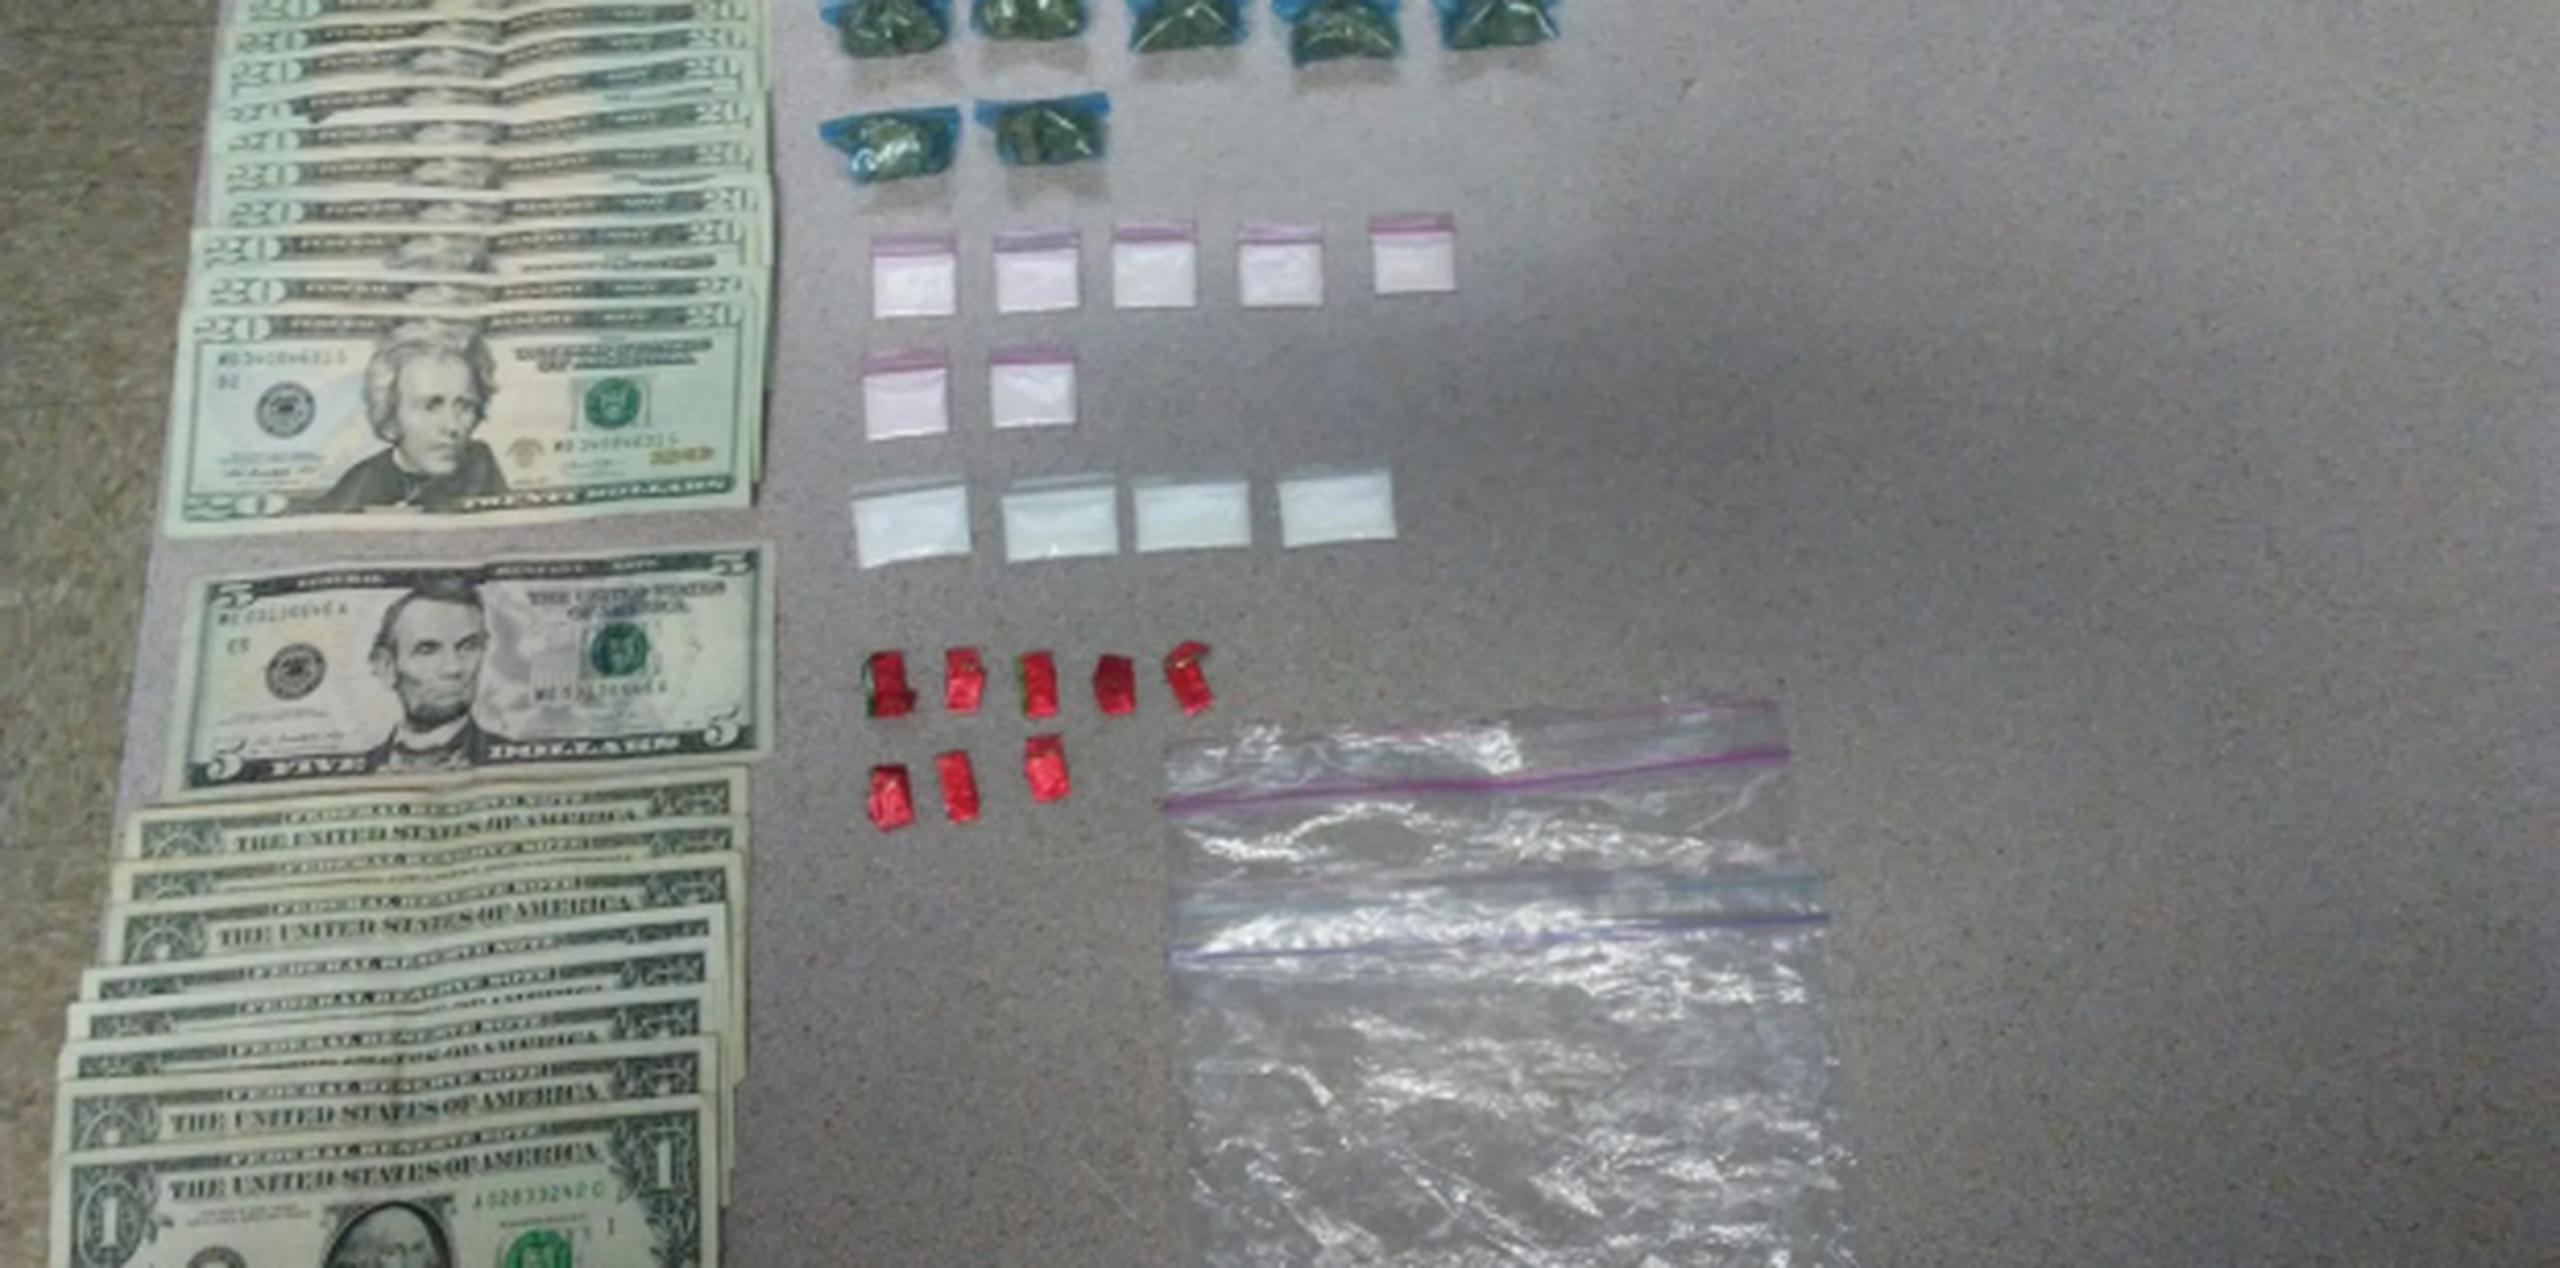 Le ocuparon bolsas de cocaína, heroína, marihuana y $330 en efectivo. (Archivo)